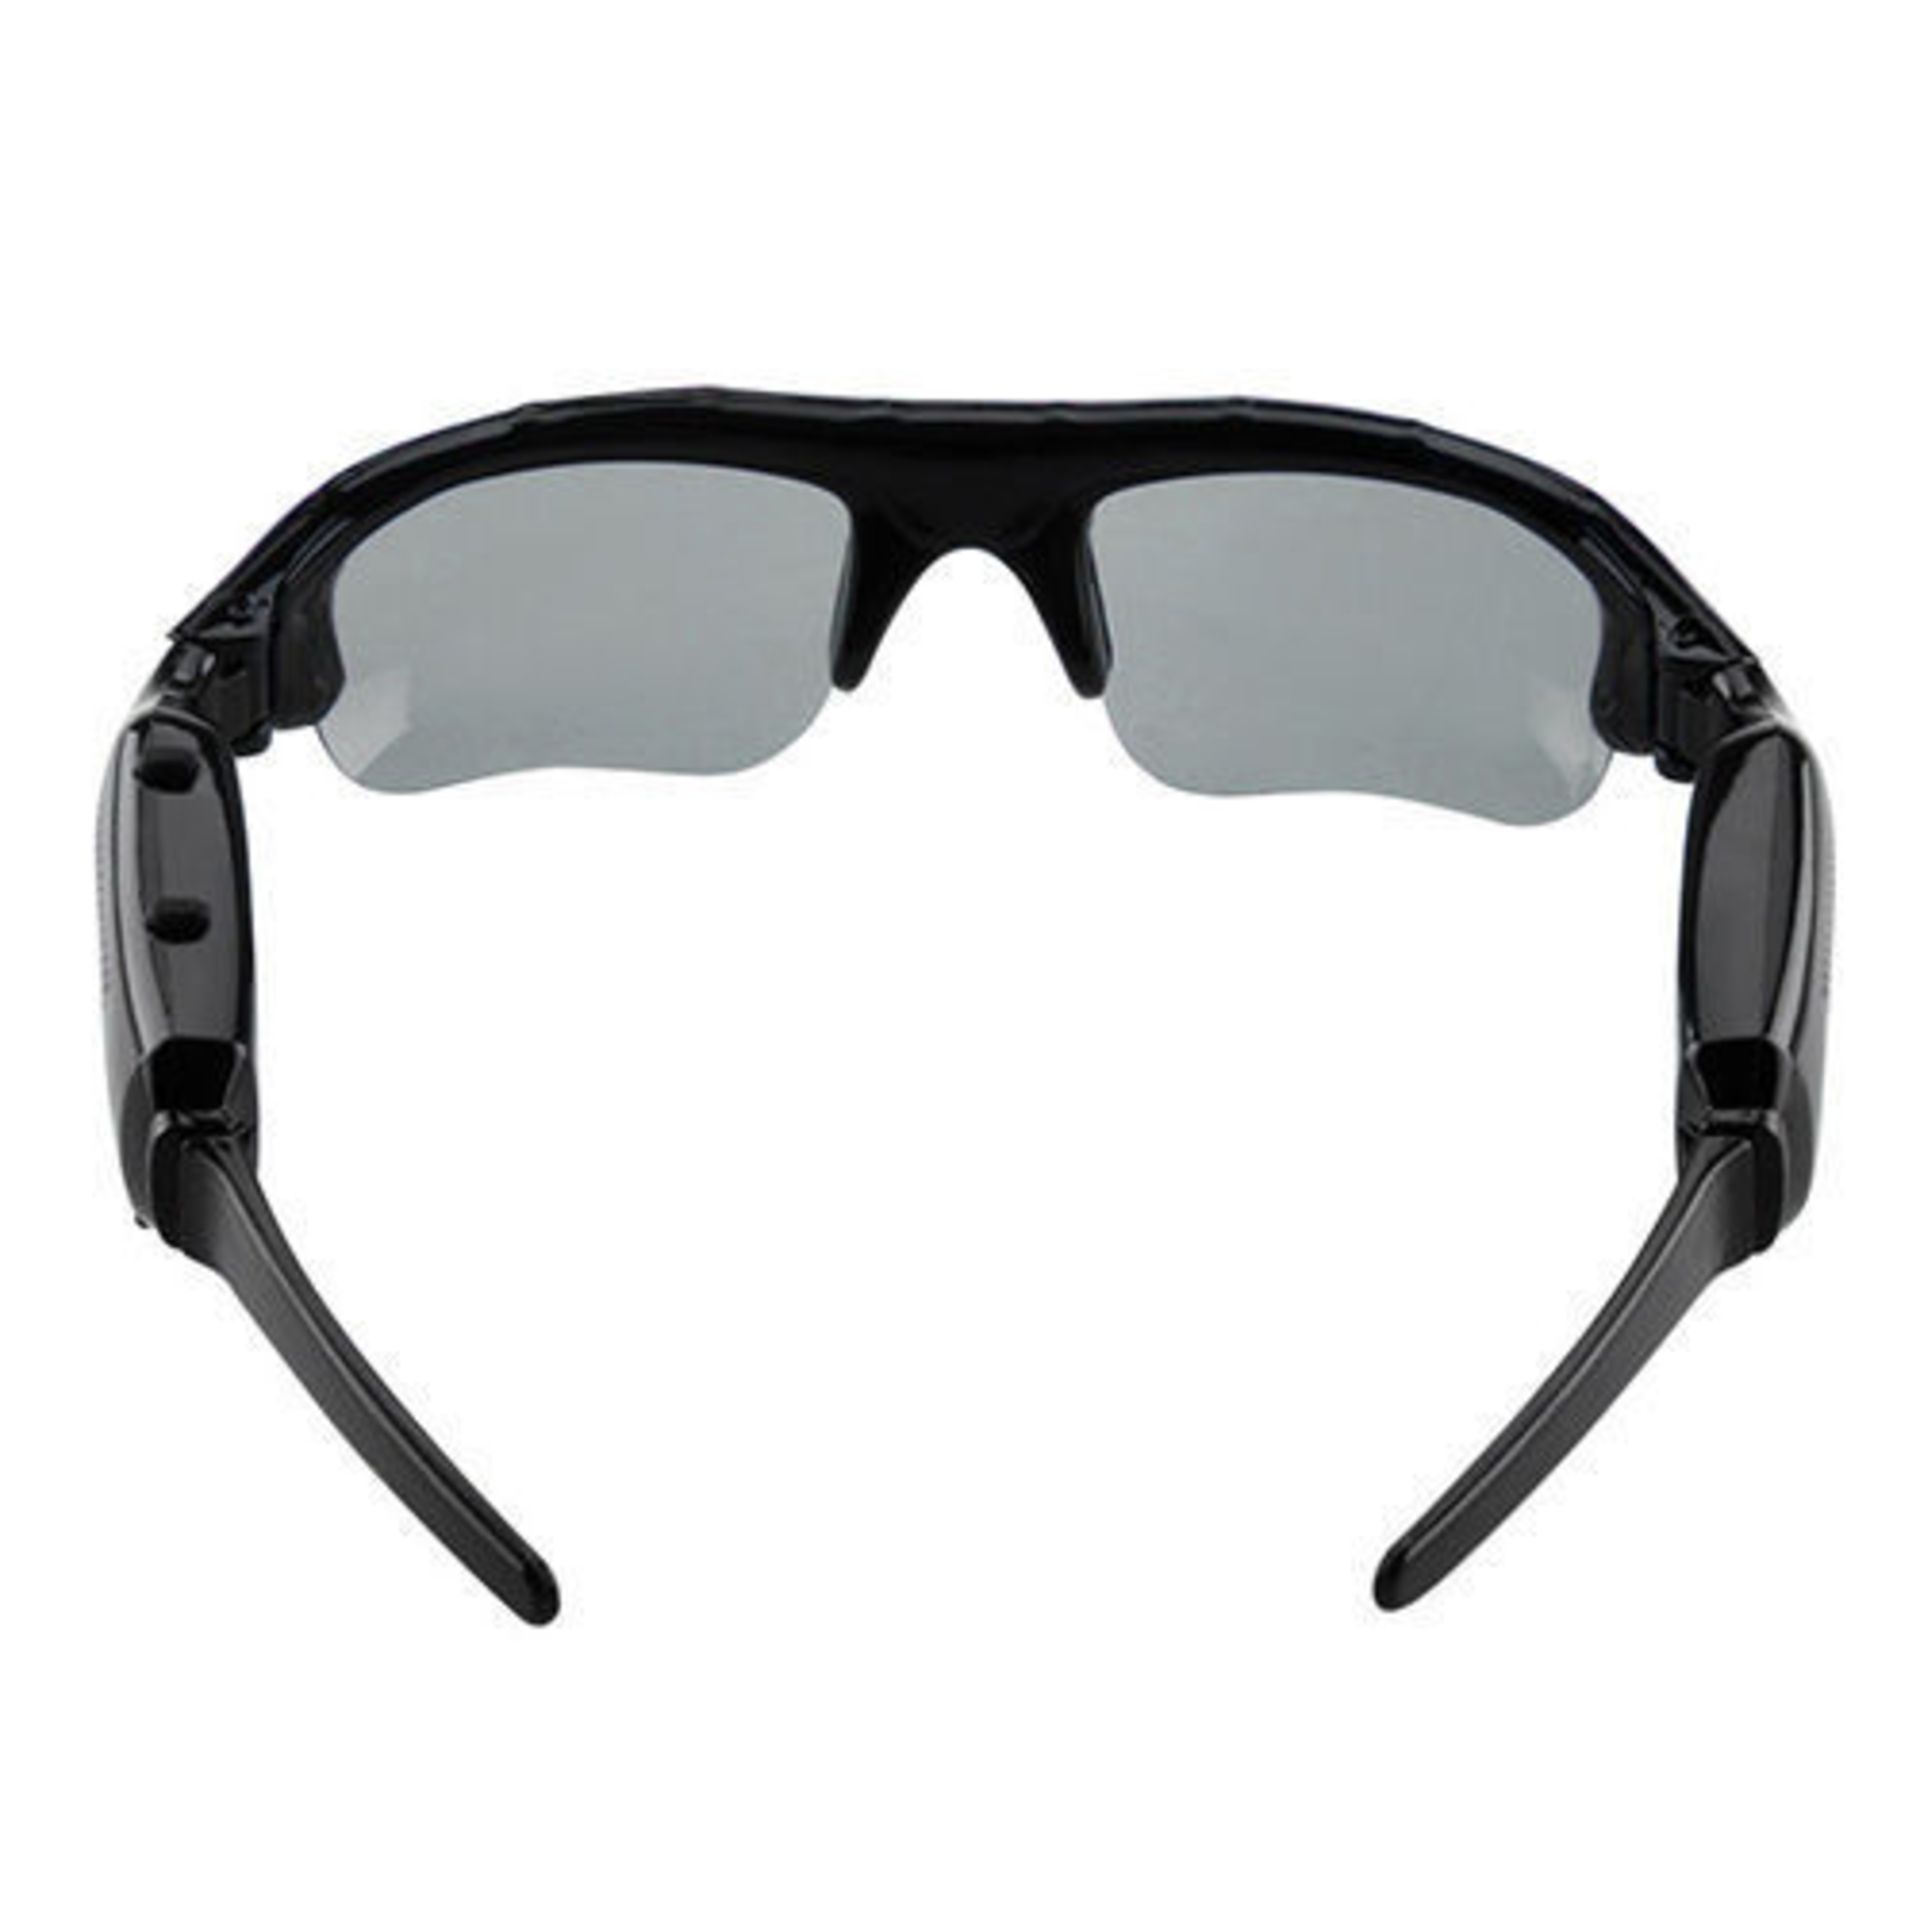 V Brand New Adventure Pro HD Video & Sound Recording Sunglasses Action Cam ISP £29.99 (Ebay) - Image 3 of 3